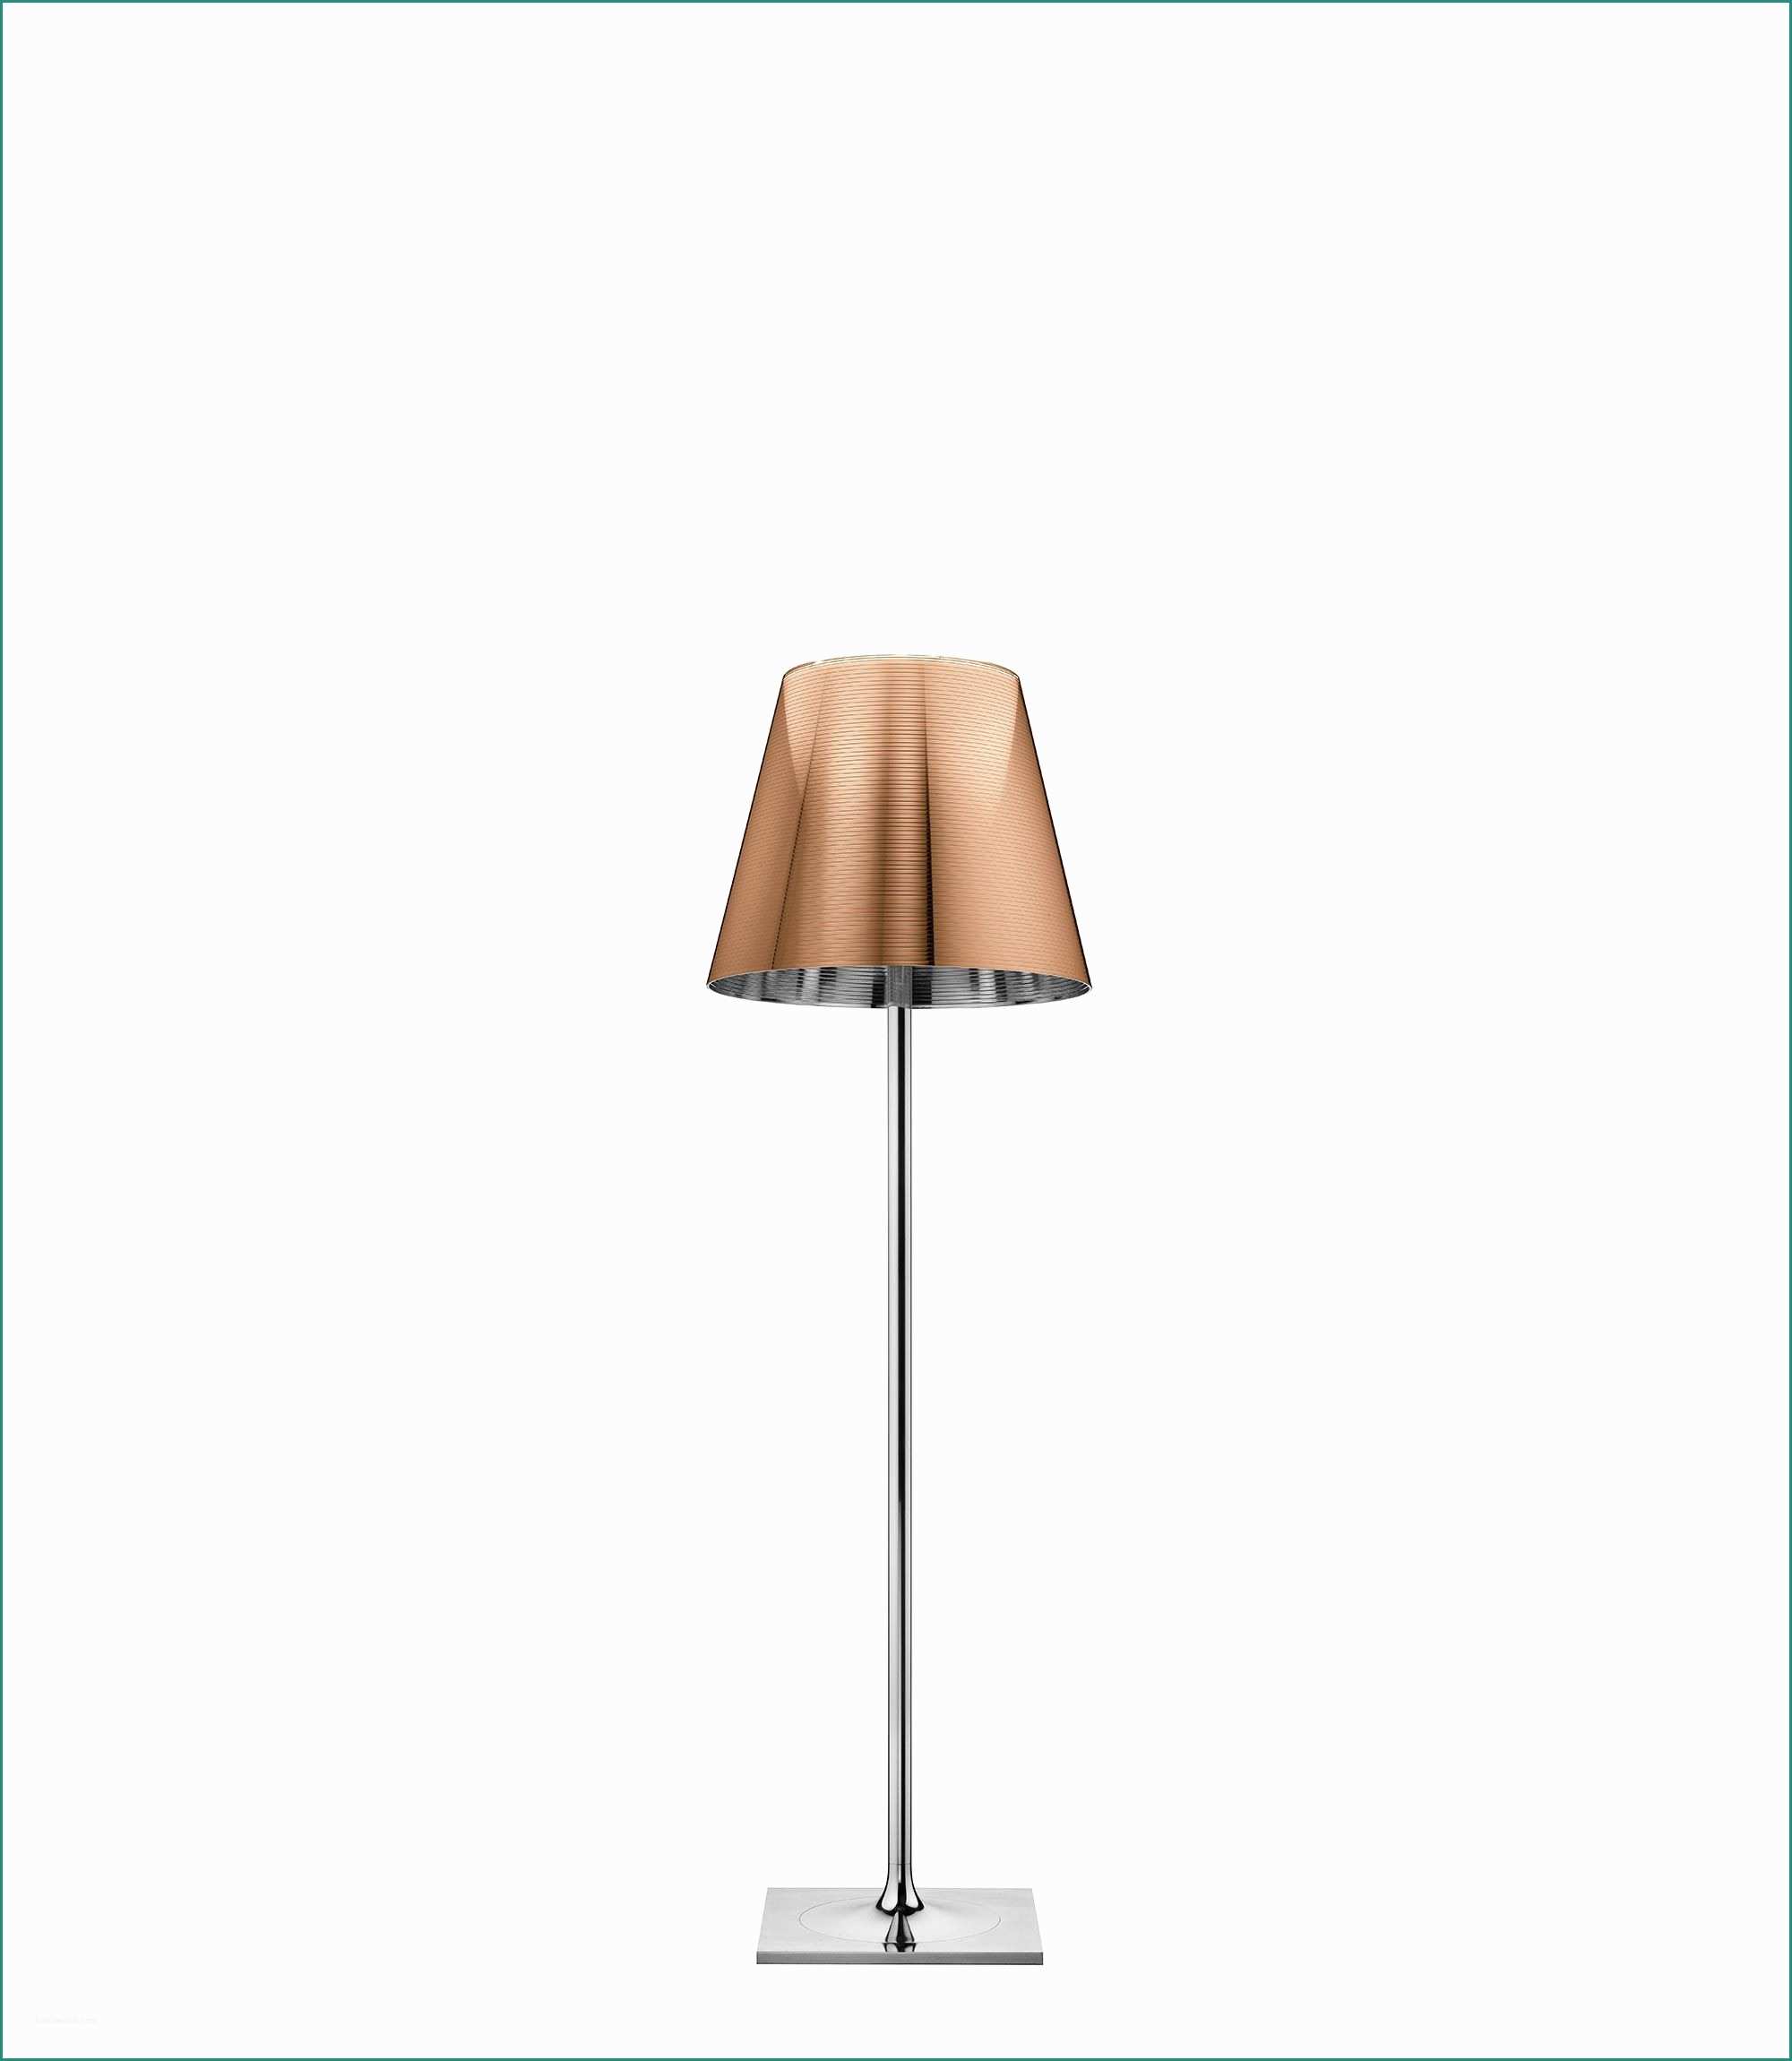 Lampada Led Rs Mm Dimmerabile E Floor Lamp Providing Diffused Lighting